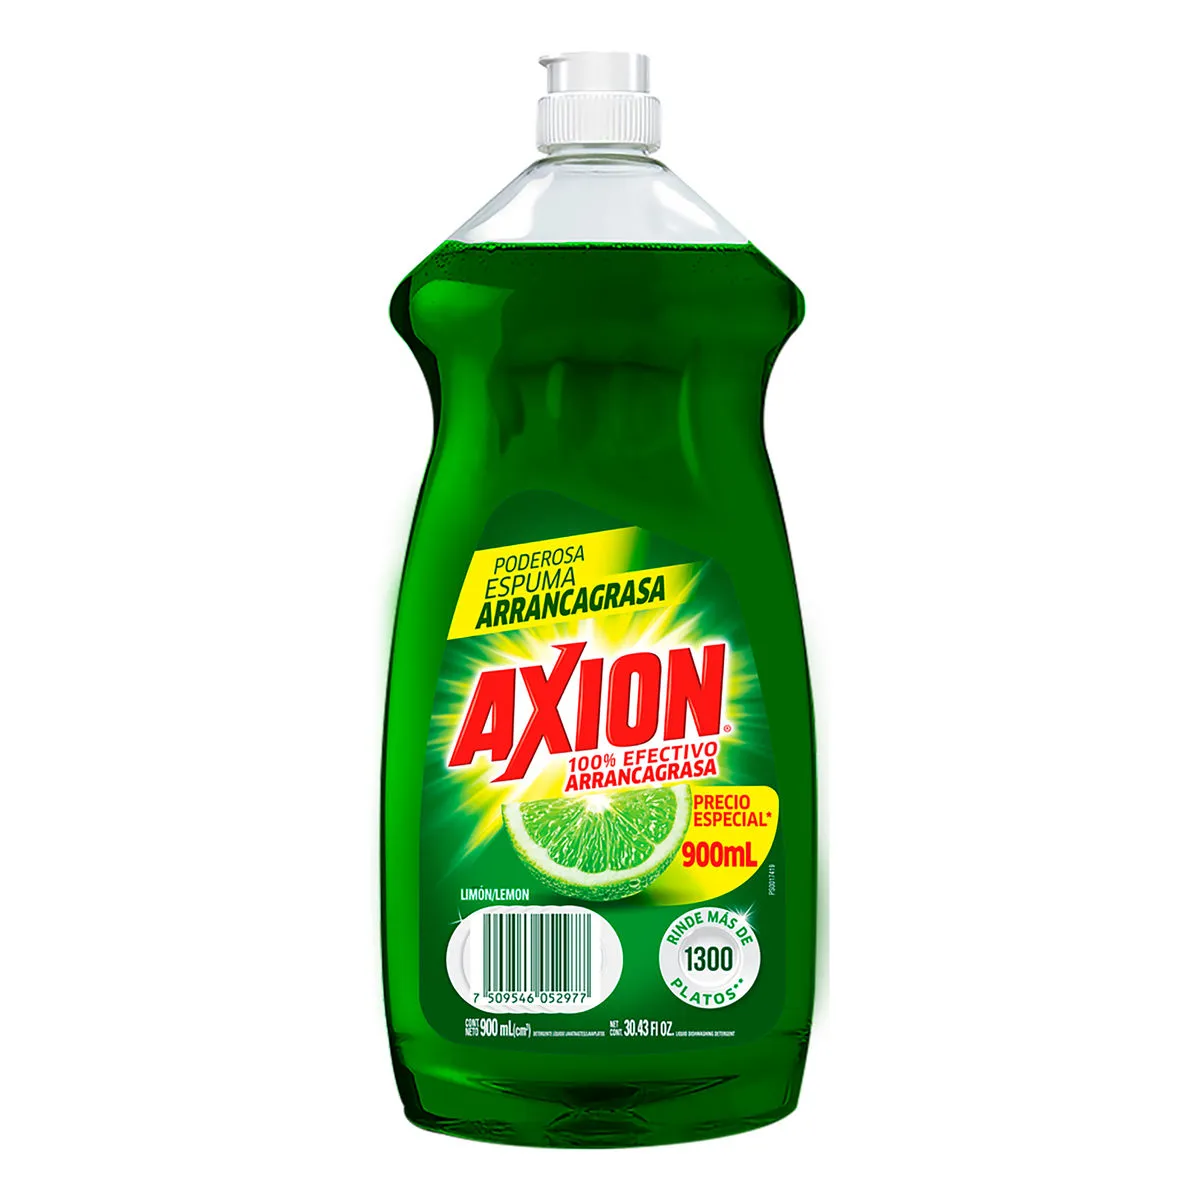 Lavatrastes liquido de Axion limon de 90 Fragancia a limón. contiene 900 ml es de facil aplicacion y fuerte poder arranca grasa.                                                                                                                                                                         0 ml                                     - AXION